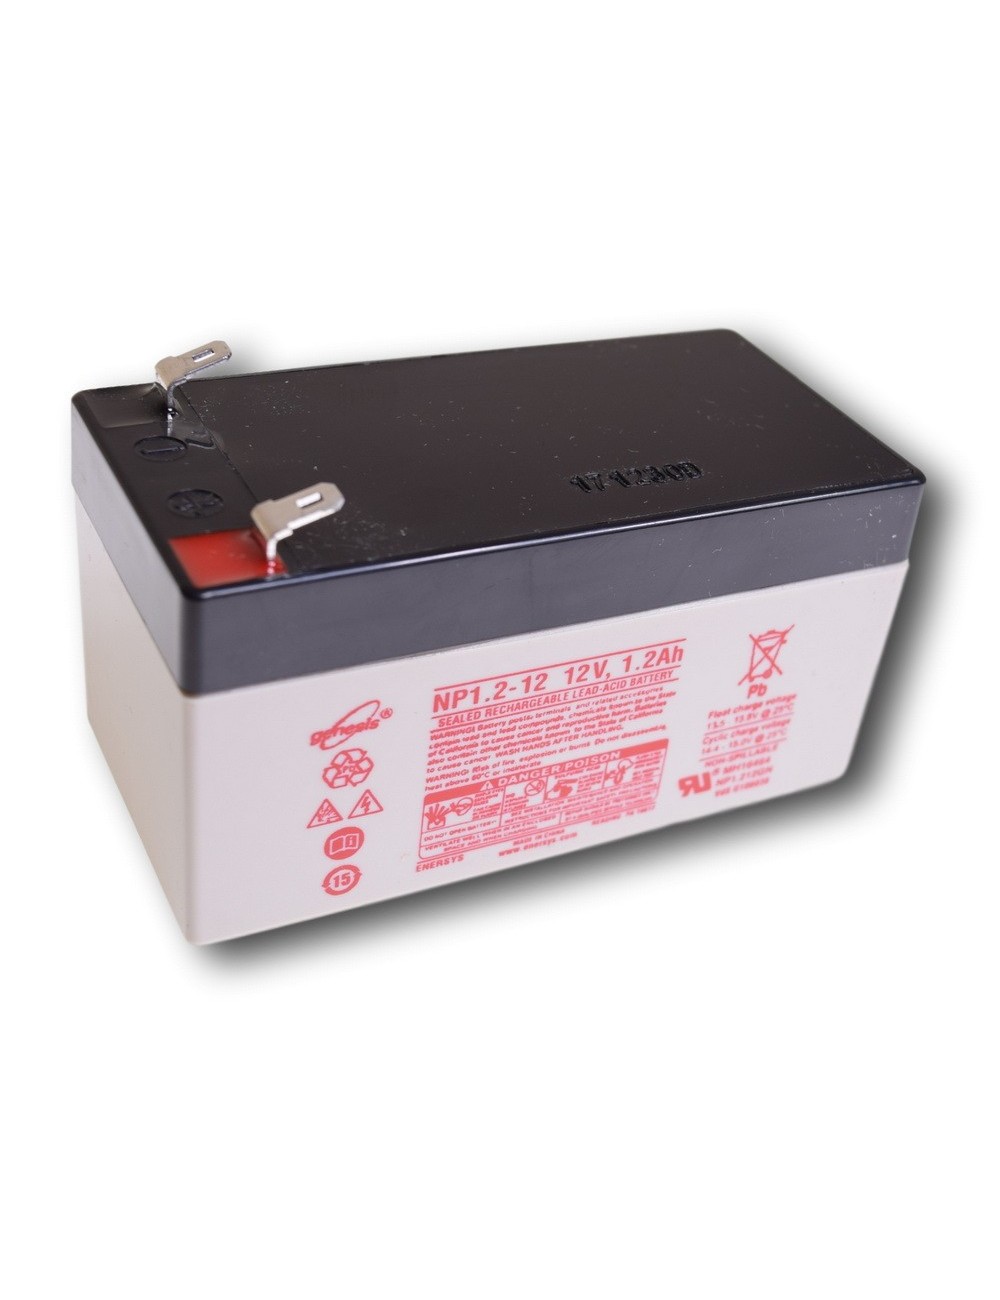 Batterie Plomb 12V 1,2Ah (NP1.2-12)